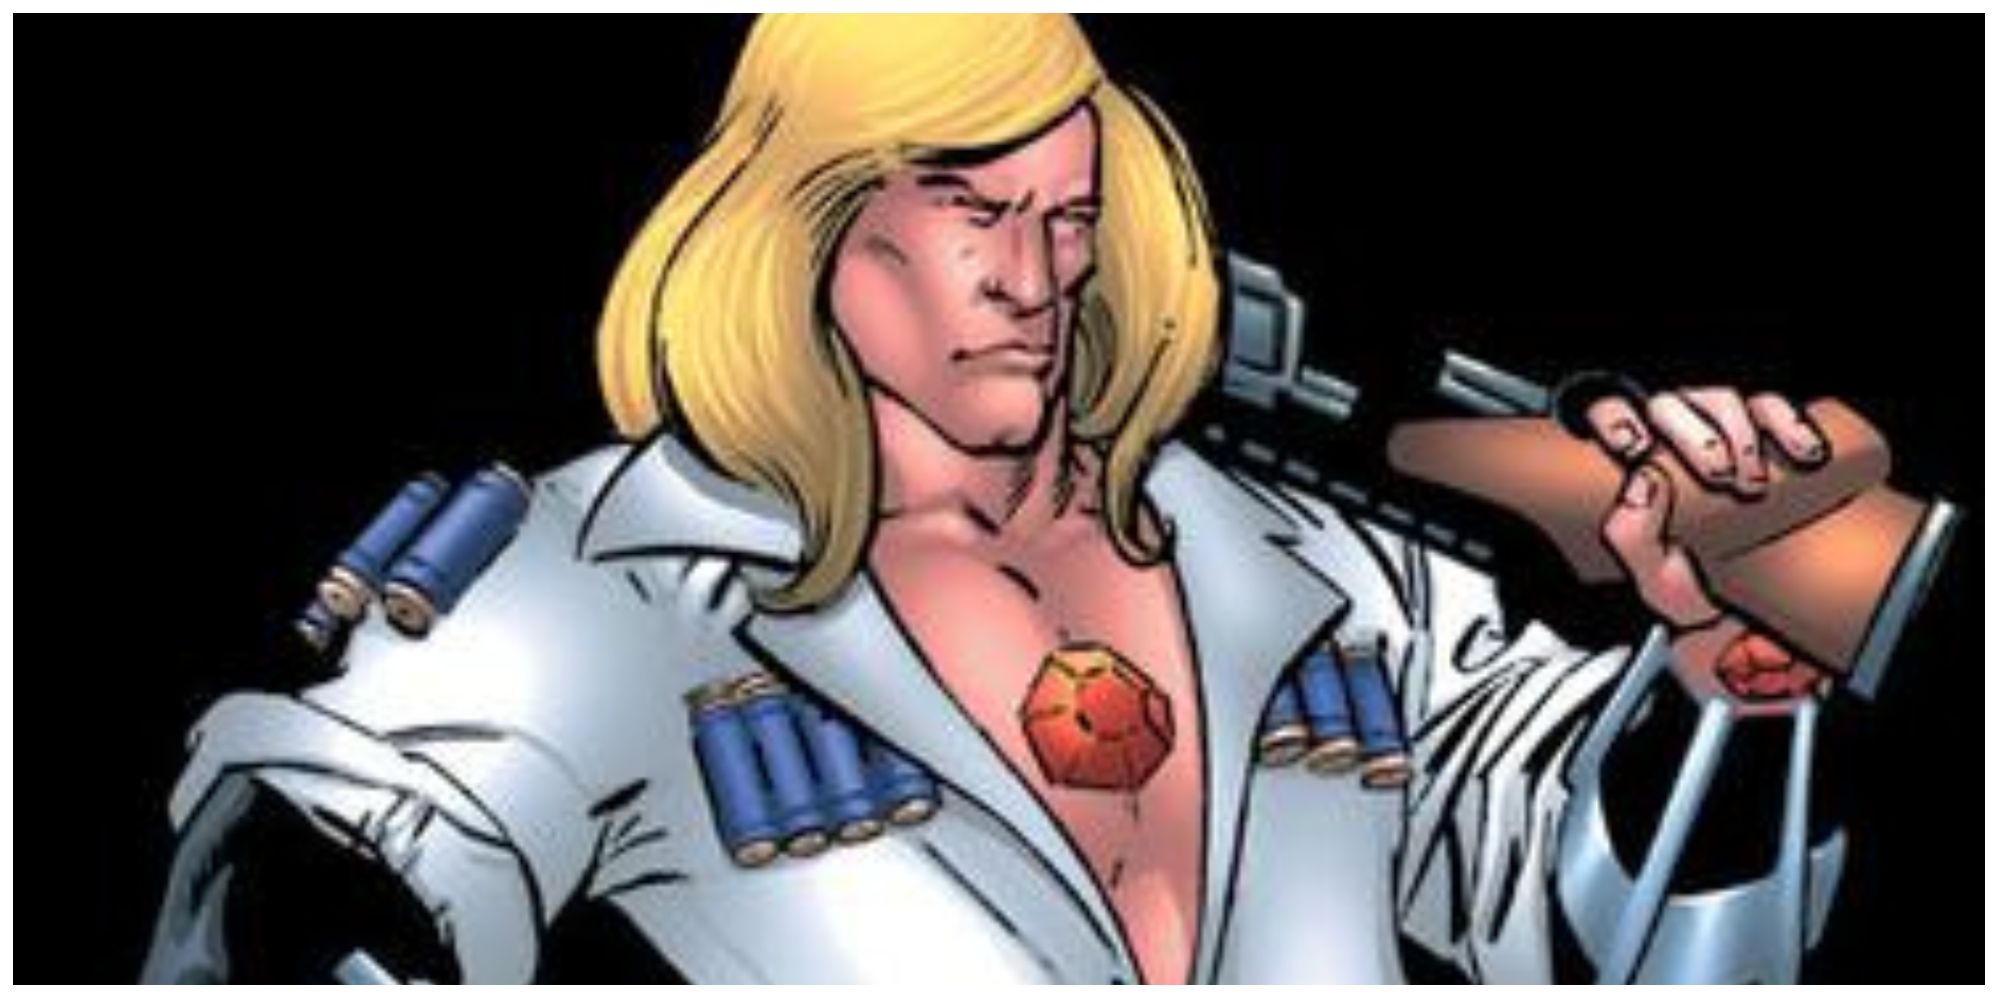 Ulysses Bloodstone, father of Elsa Bloodstone, holding a gun in Marvel Comics.